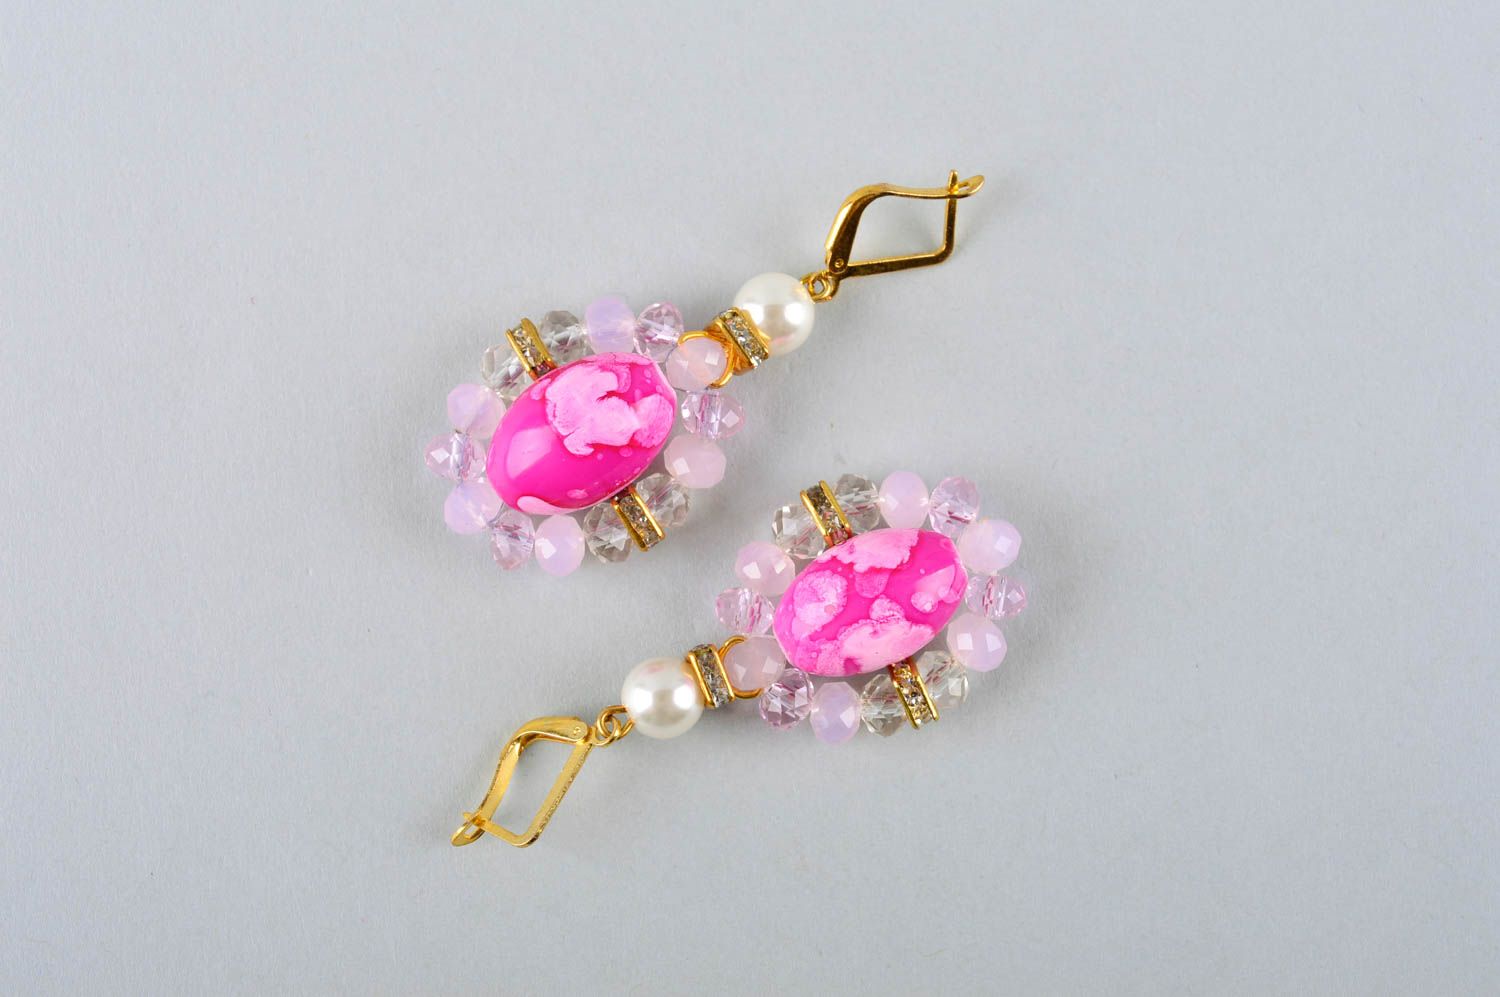 Homemade jewelry earrings for ladies cute earrings designer accessories photo 4